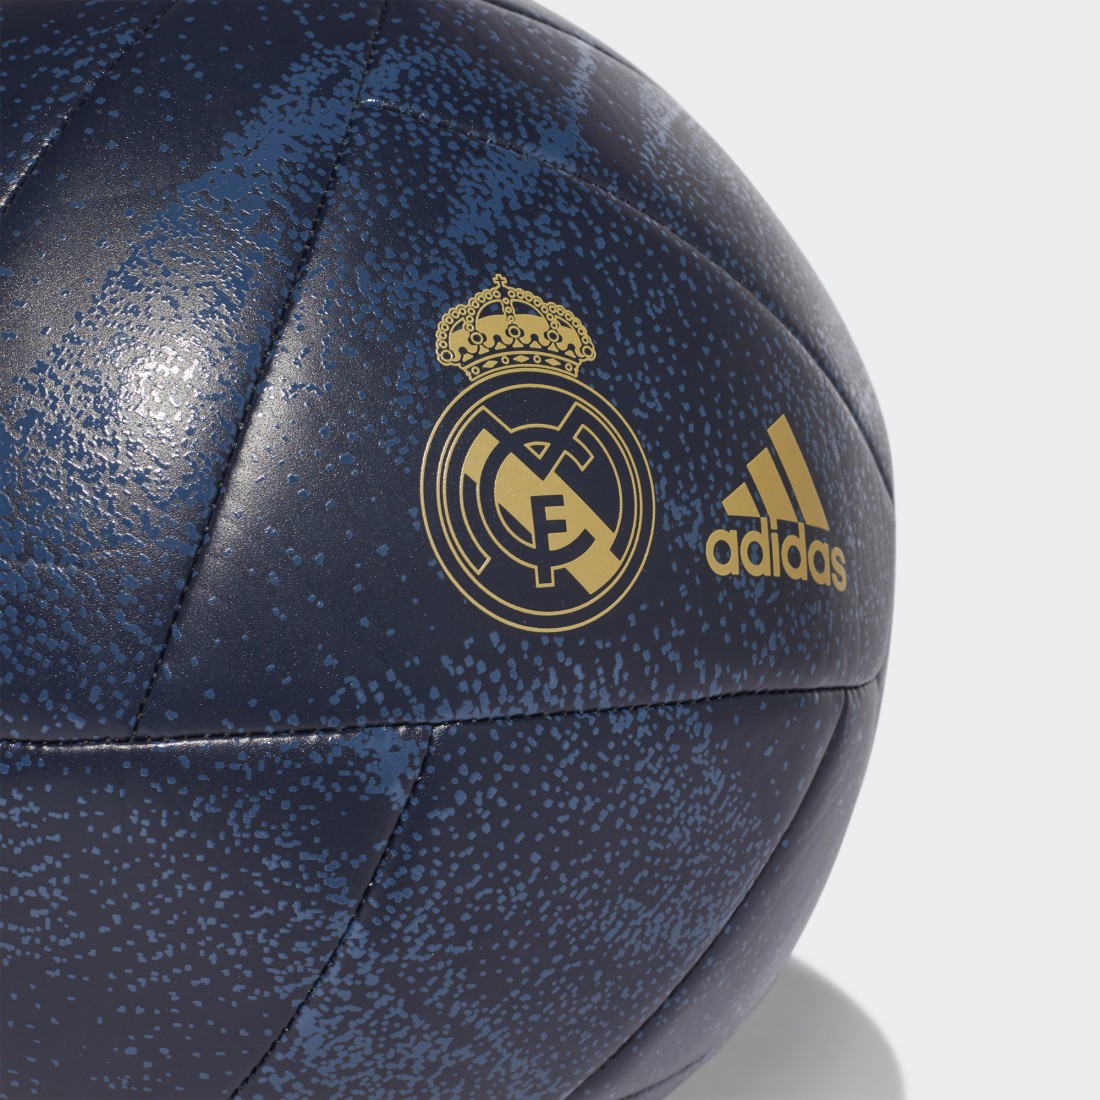 adidas - Ballon De Foot Real Madrid EC3035 Marine LaBoutiqueOfficielle.com